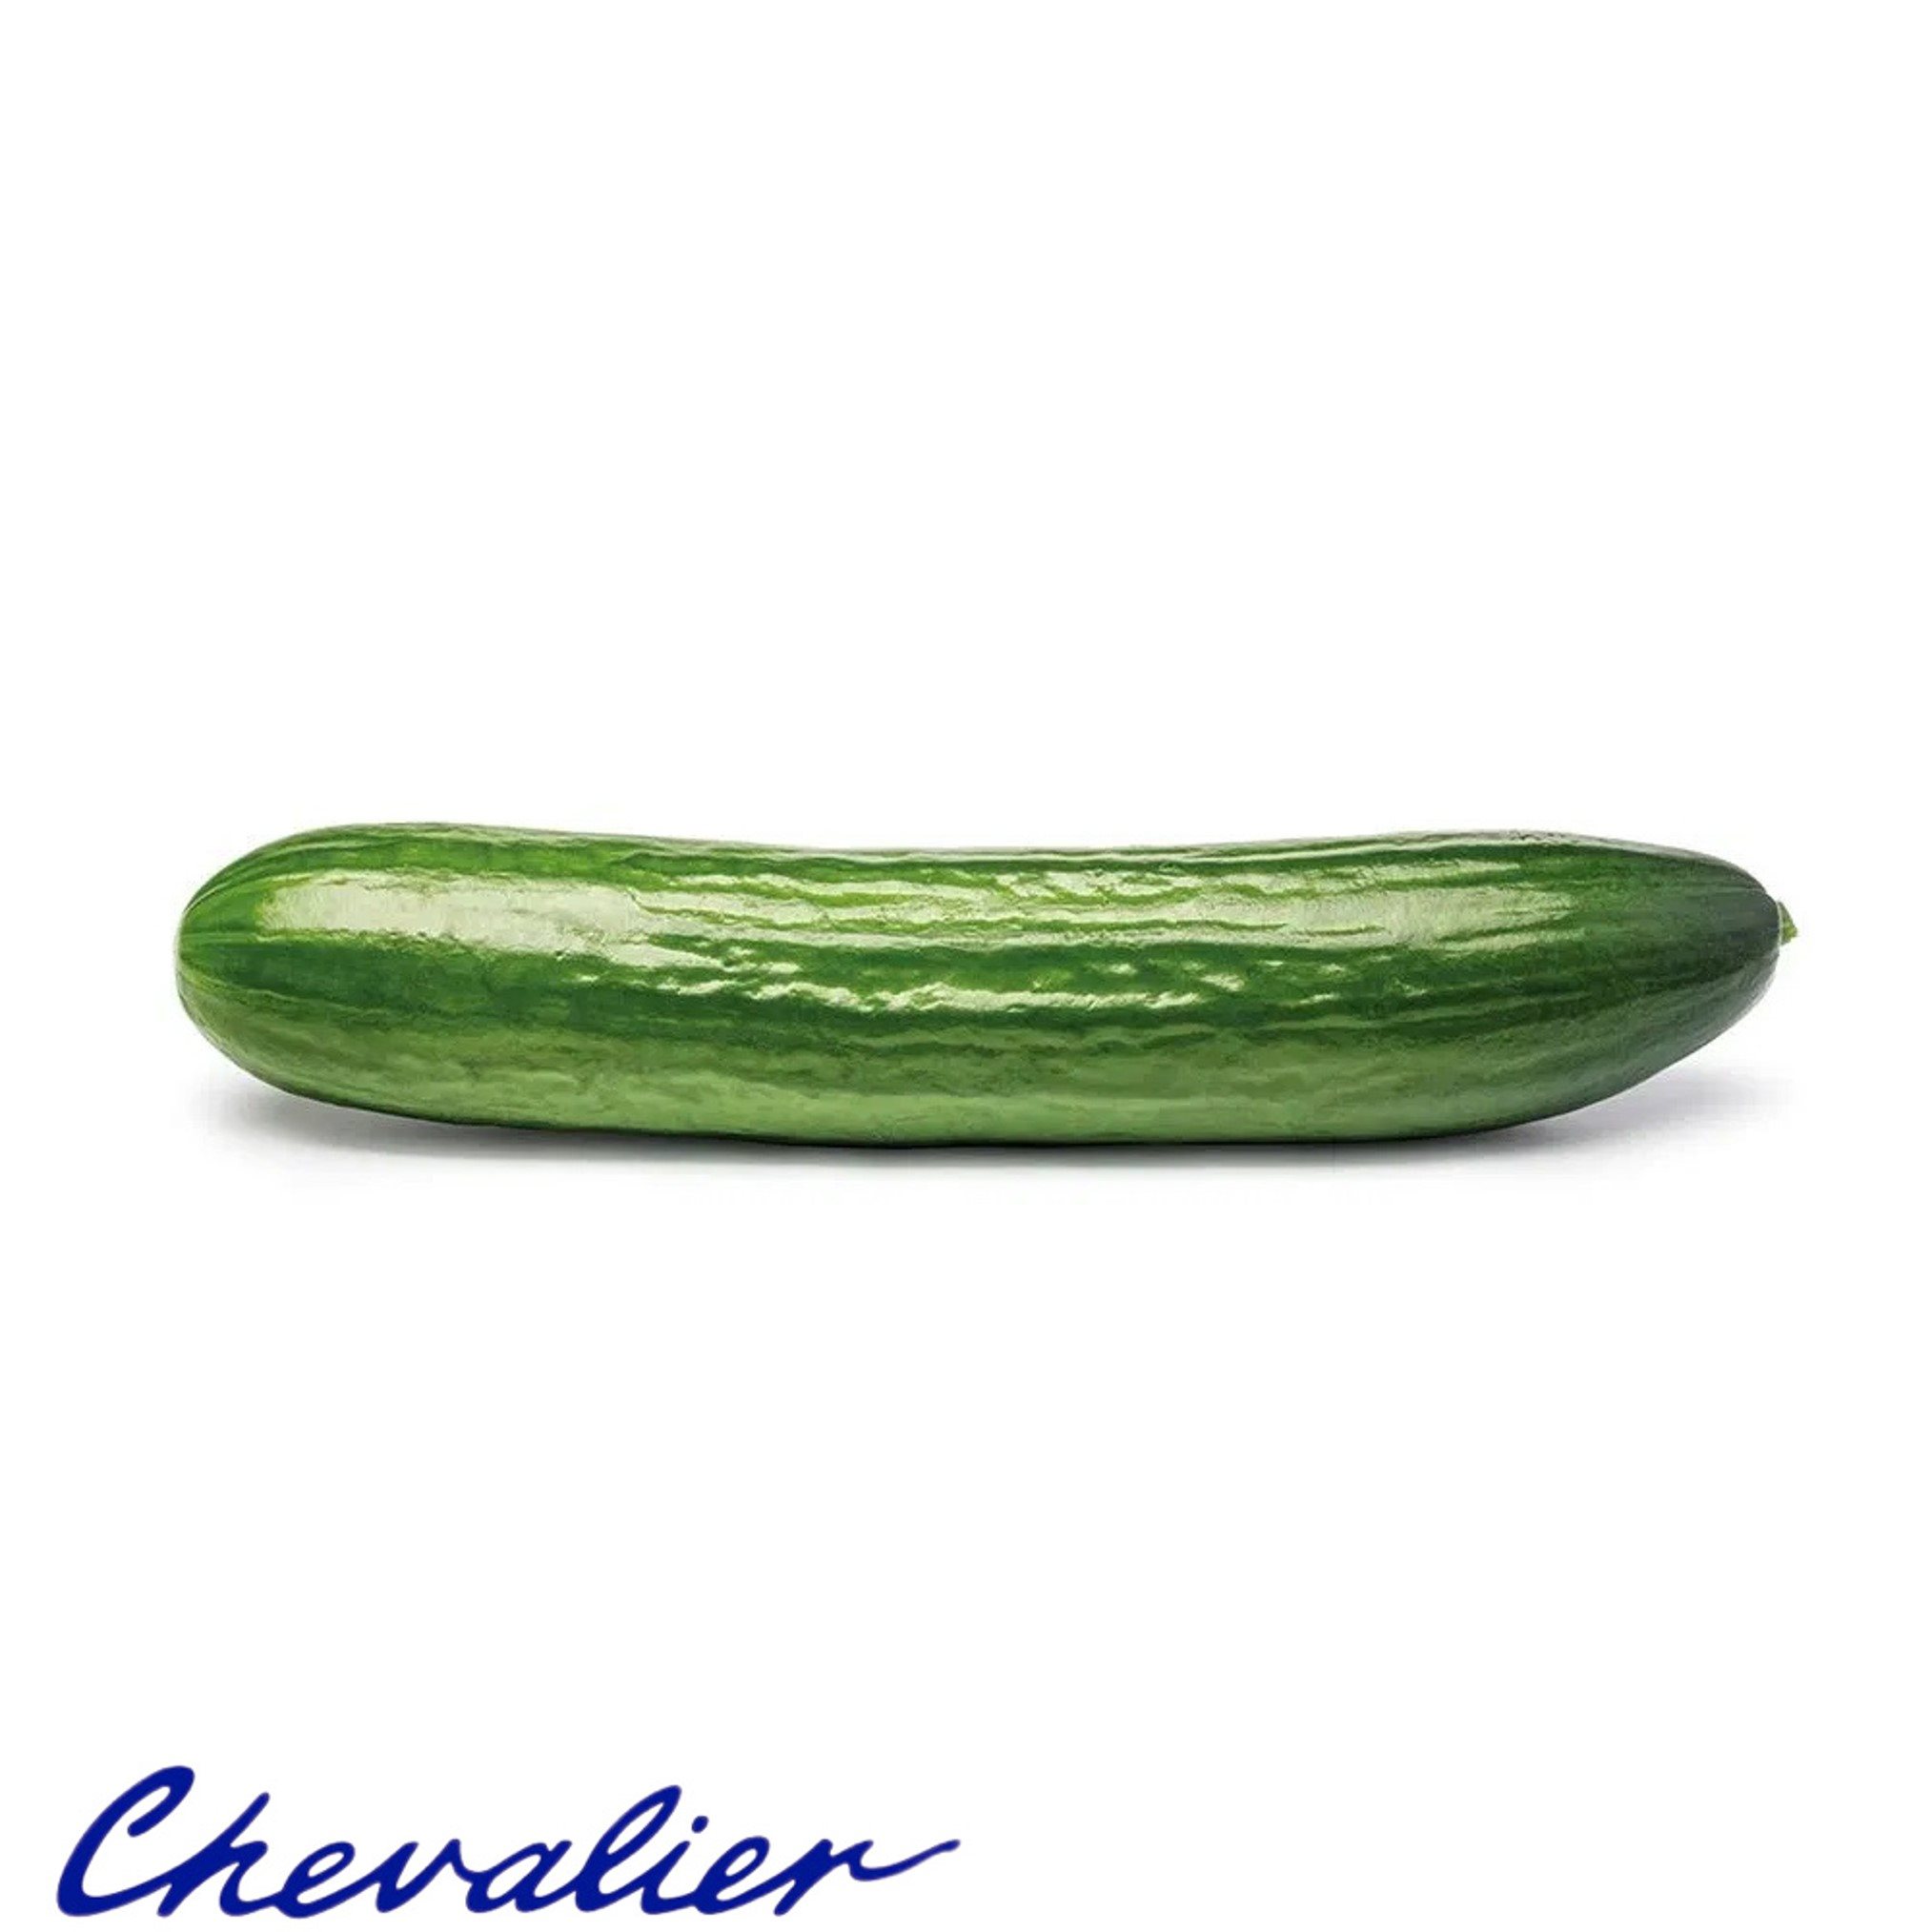 Cucumber Tele